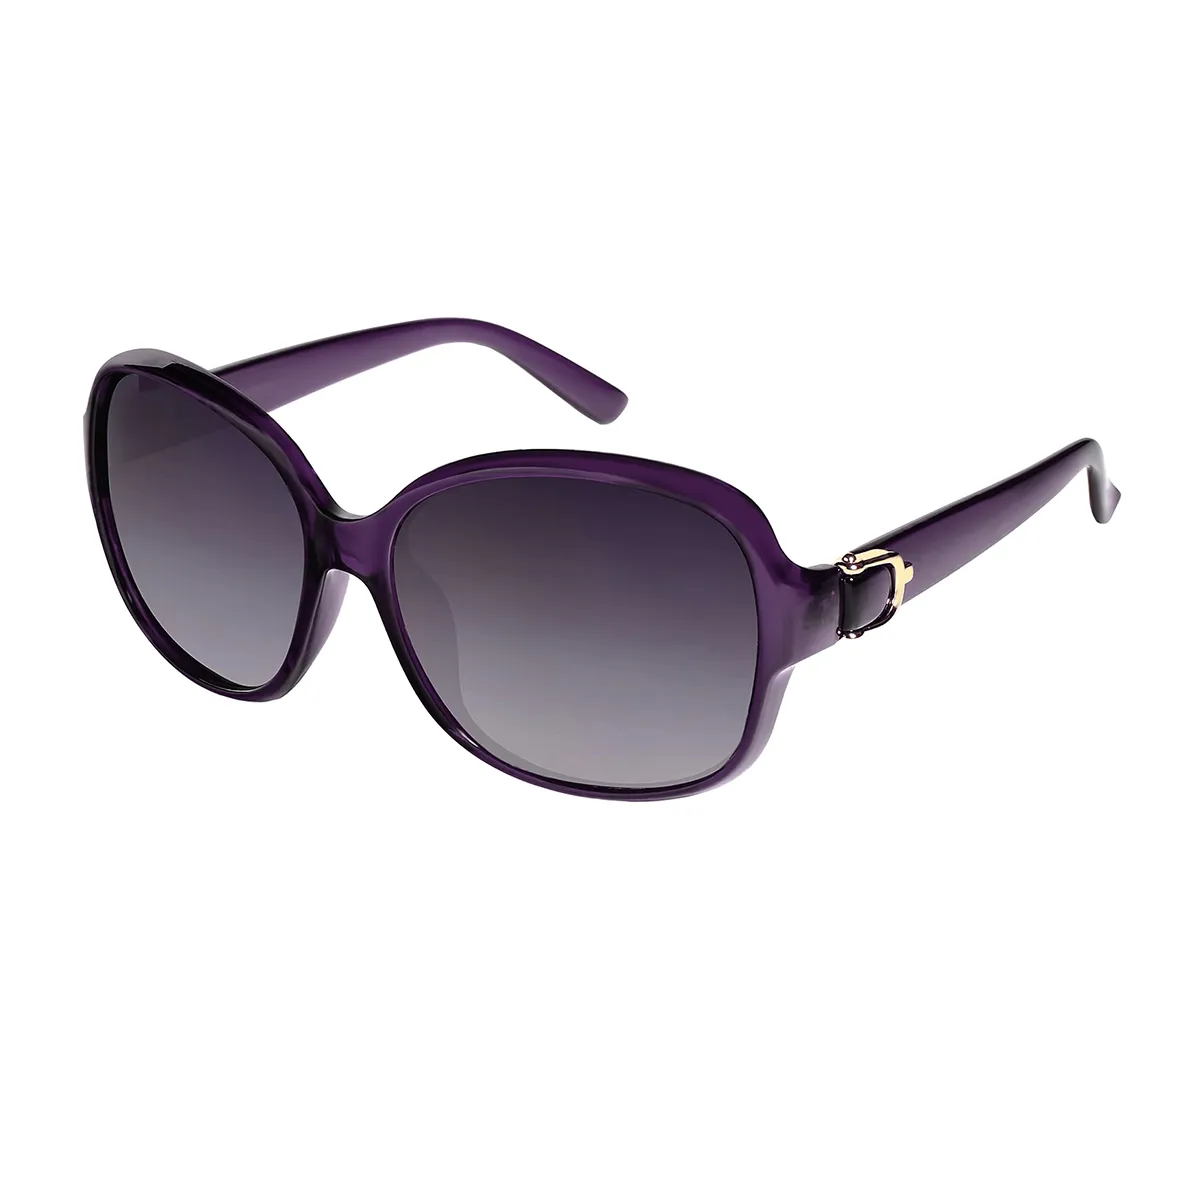 Nanda - Round Purple Sunglasses for Women